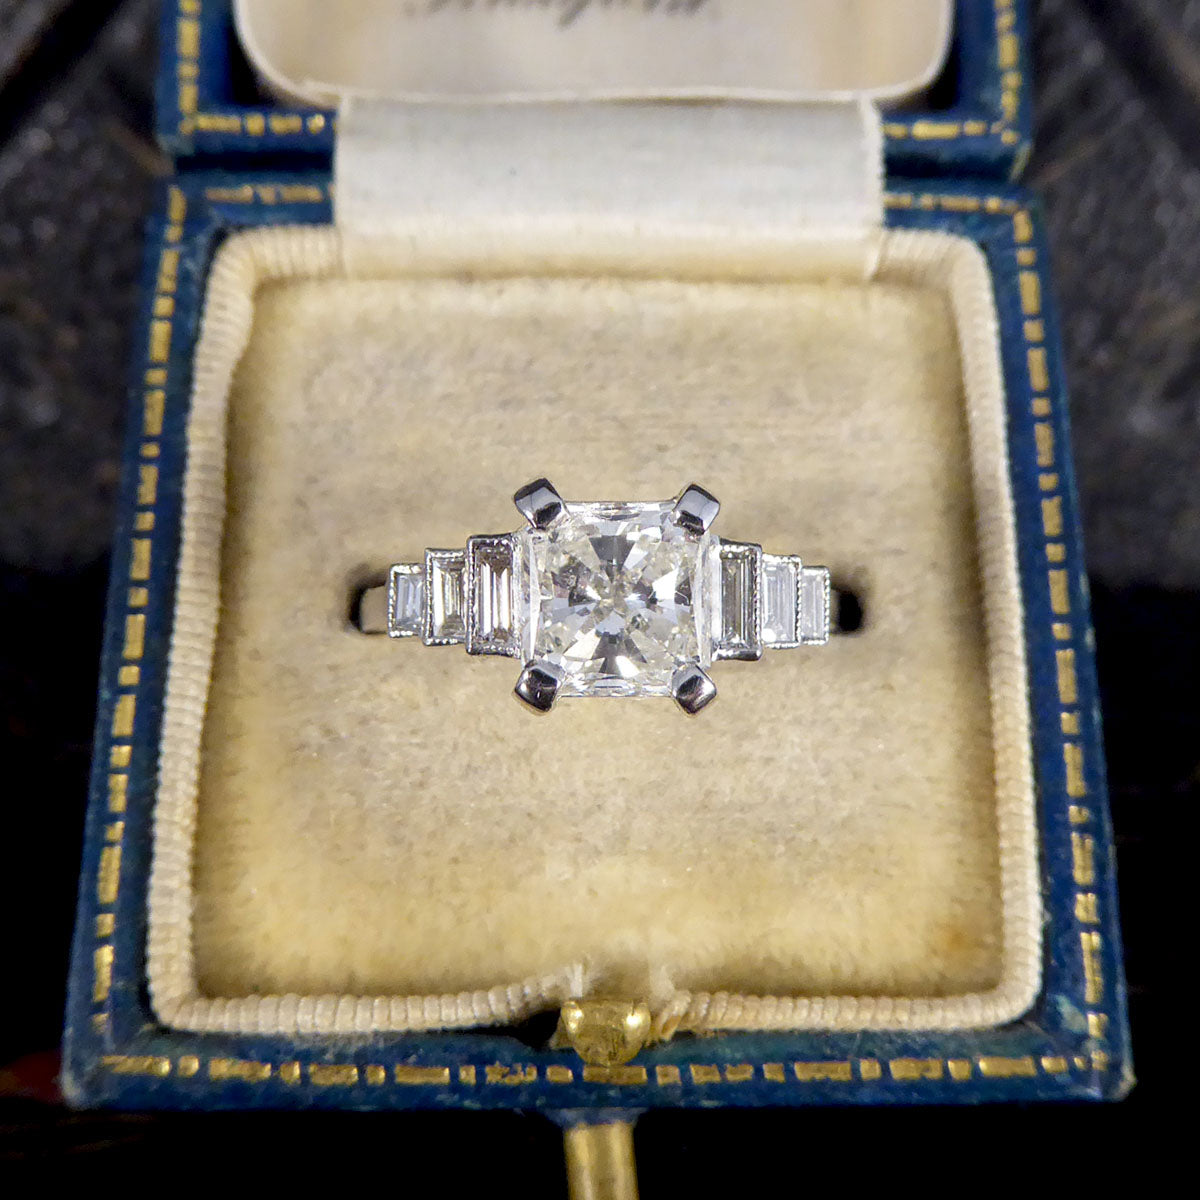 1.37ct Radiant Cut Diamond Engagement Ring with Baguette Cut Diamond Shoulders in Platinum